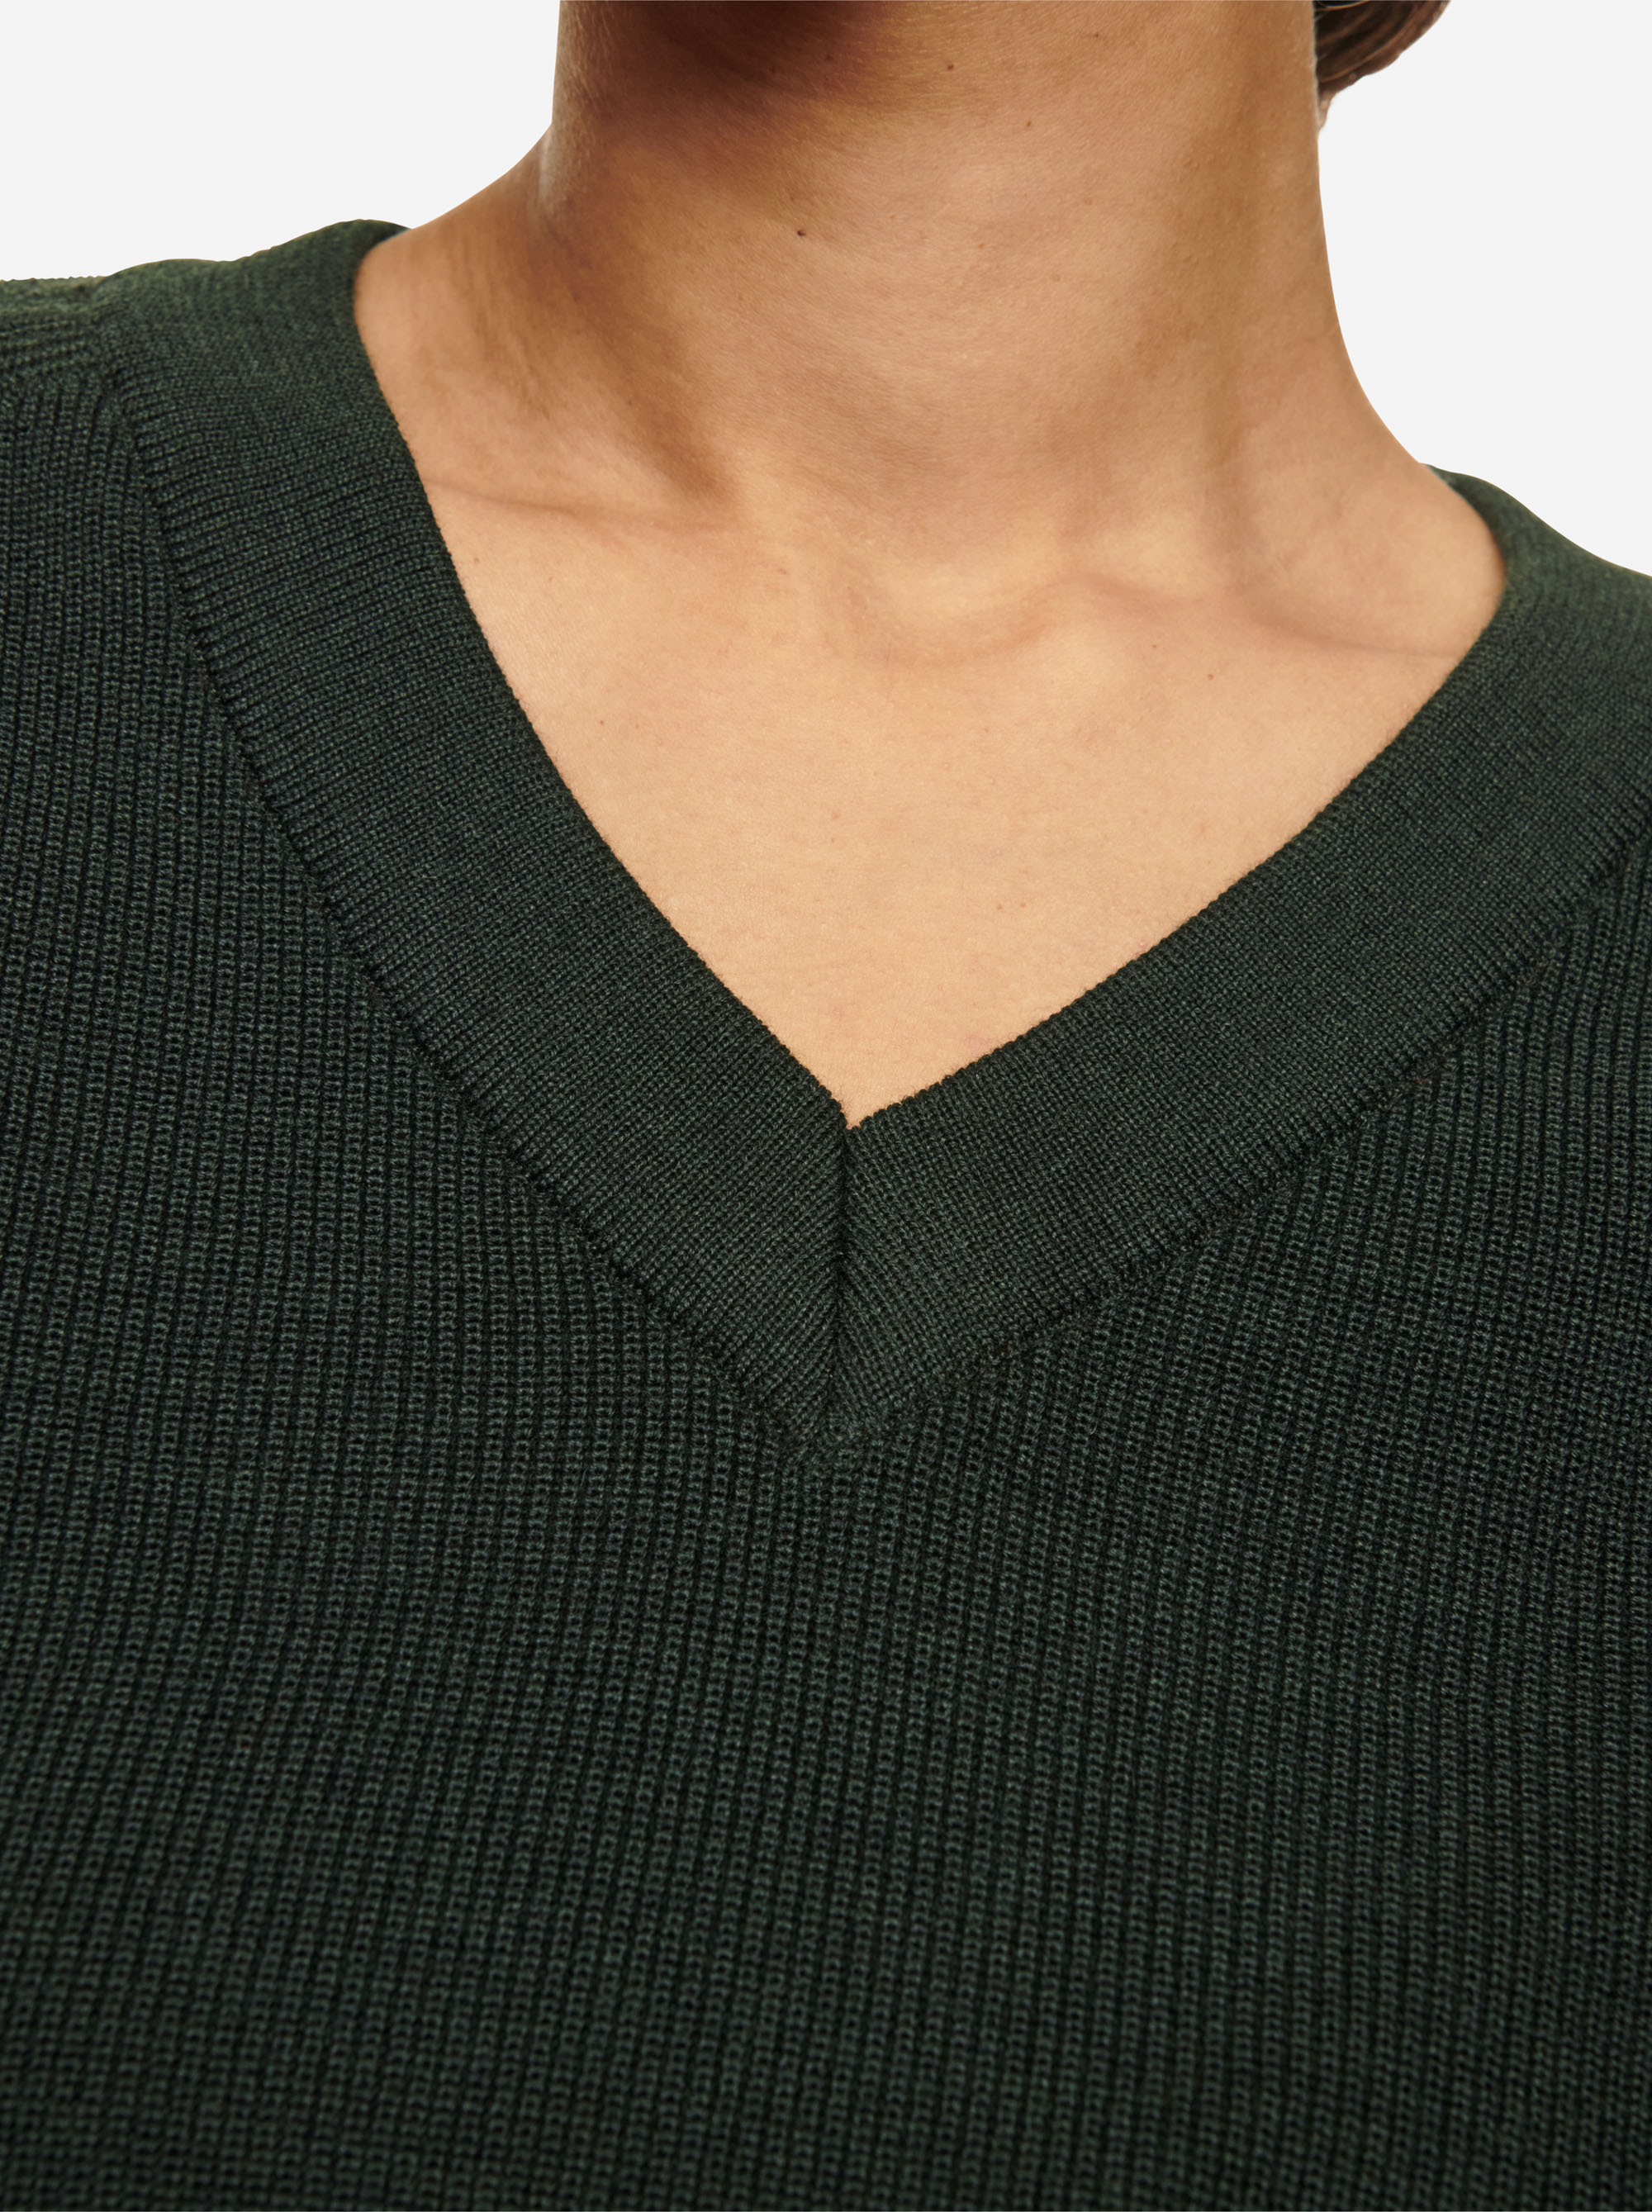 Teym - Vneck - The Merino Sweater - Women - Green - 3